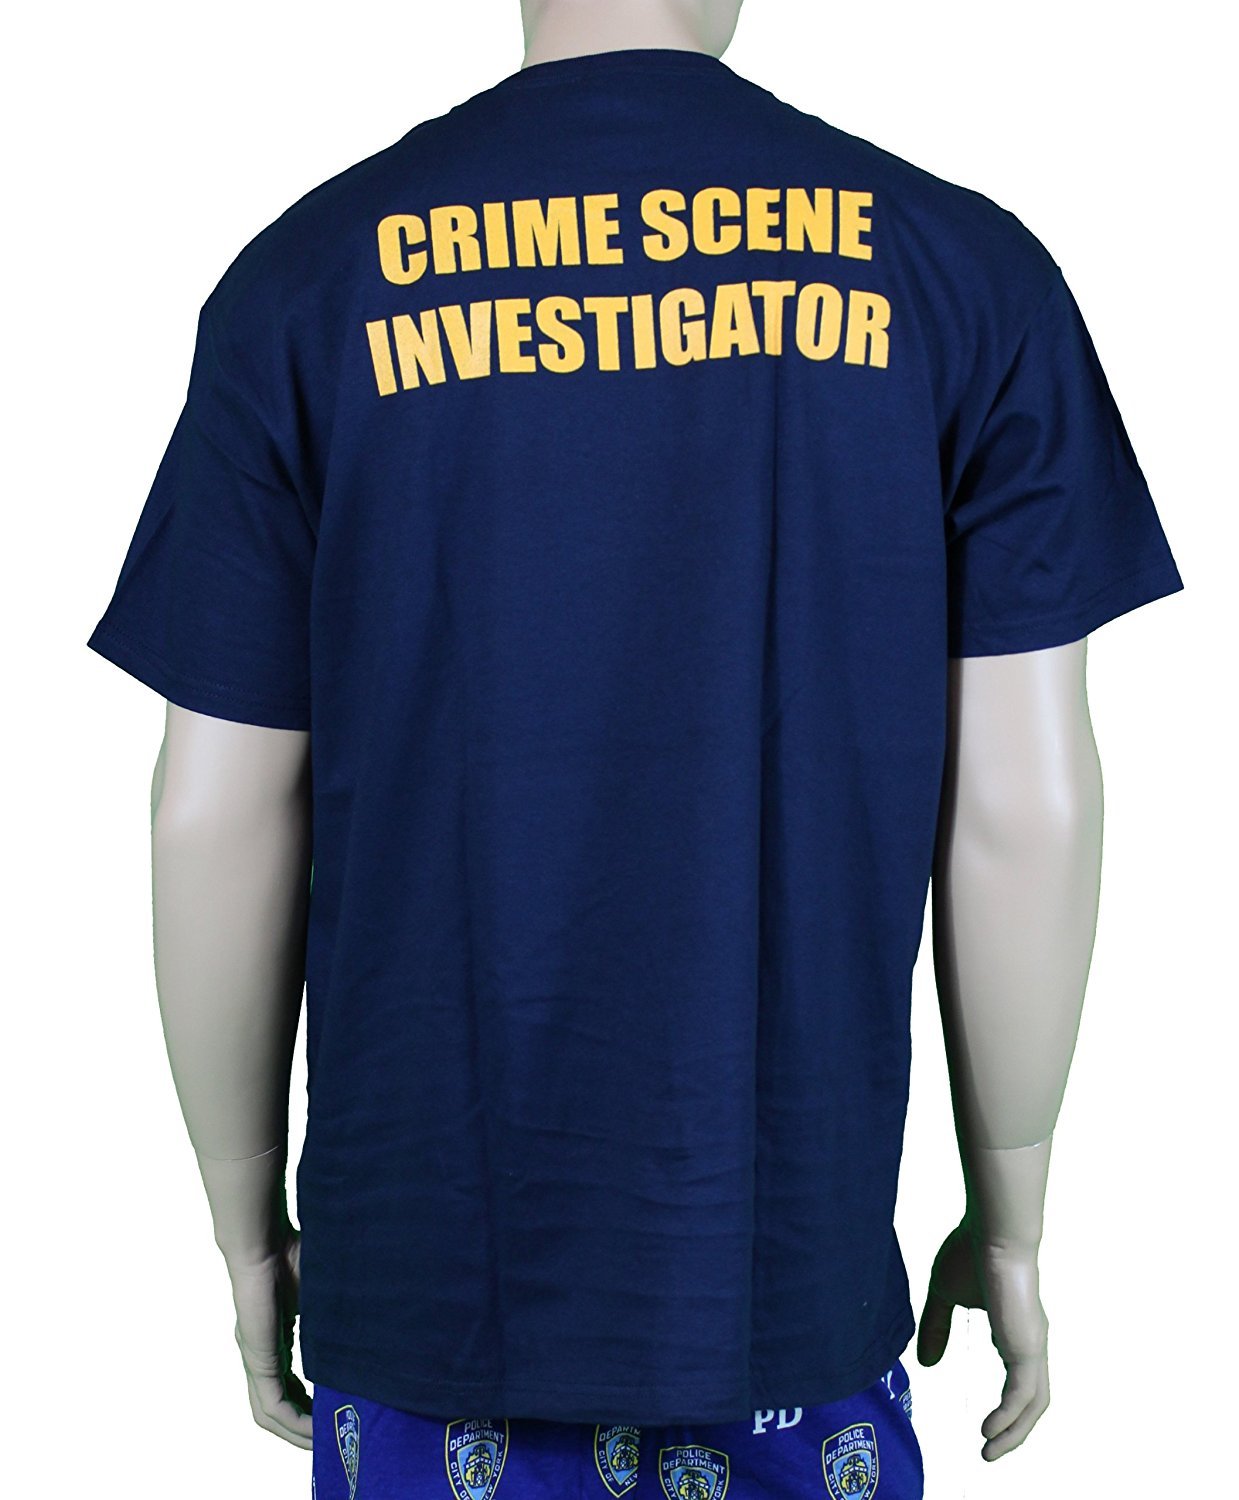 CSI New York Crime Scene Tee Investigation T-Shirt Navy